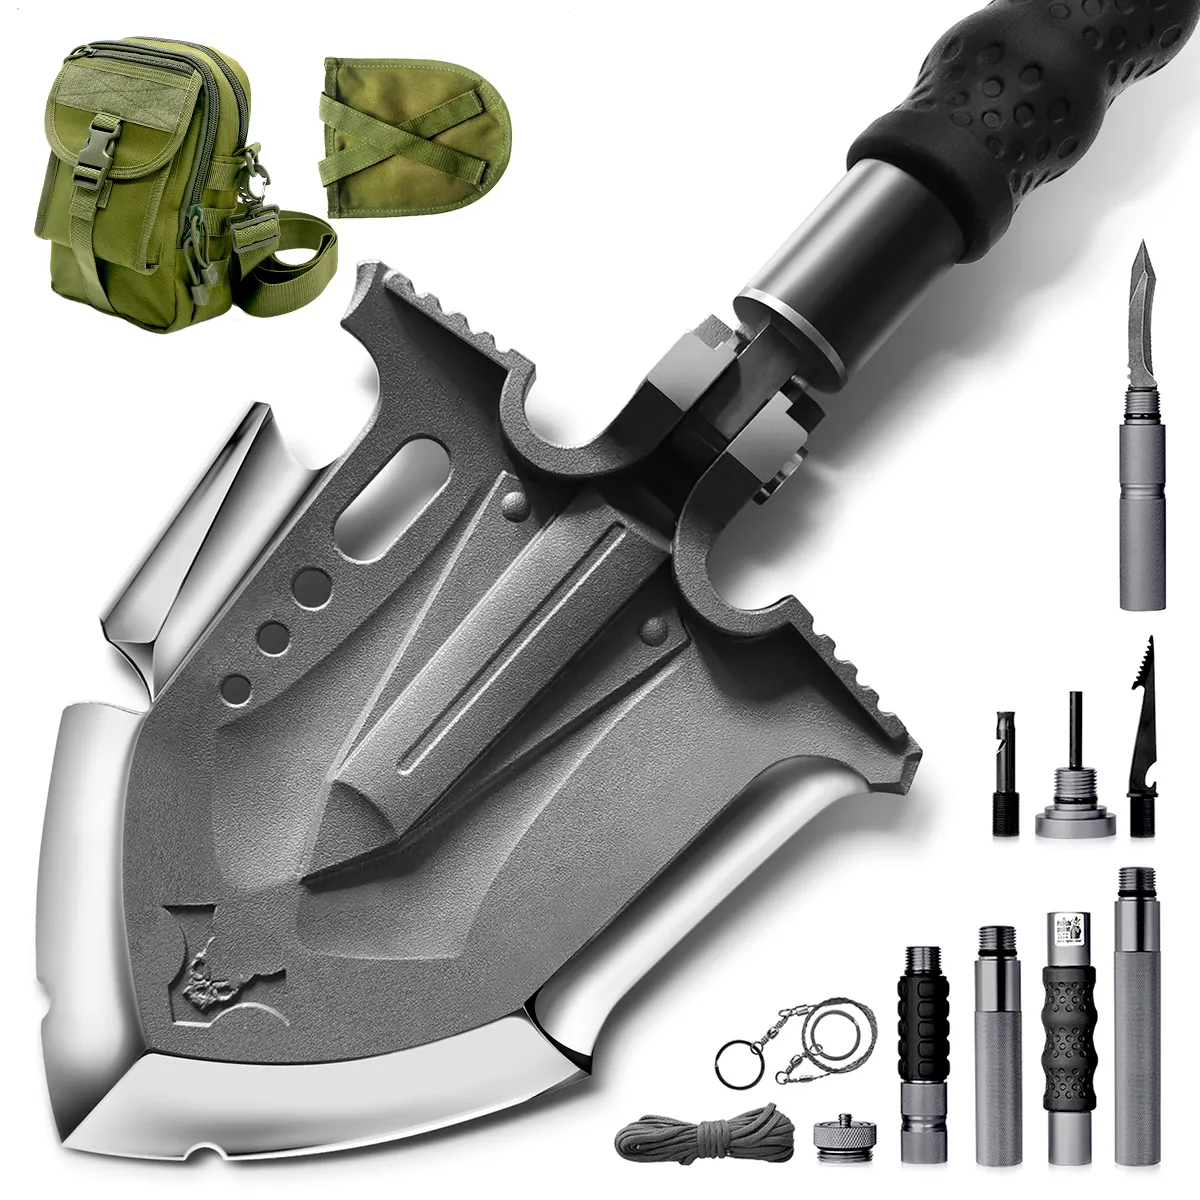 Amazon Hot Sale 28 in Survival Shovel Kit Tactical Camping Foldable Shovel Martensitic Steel Multifunction Survival Gear